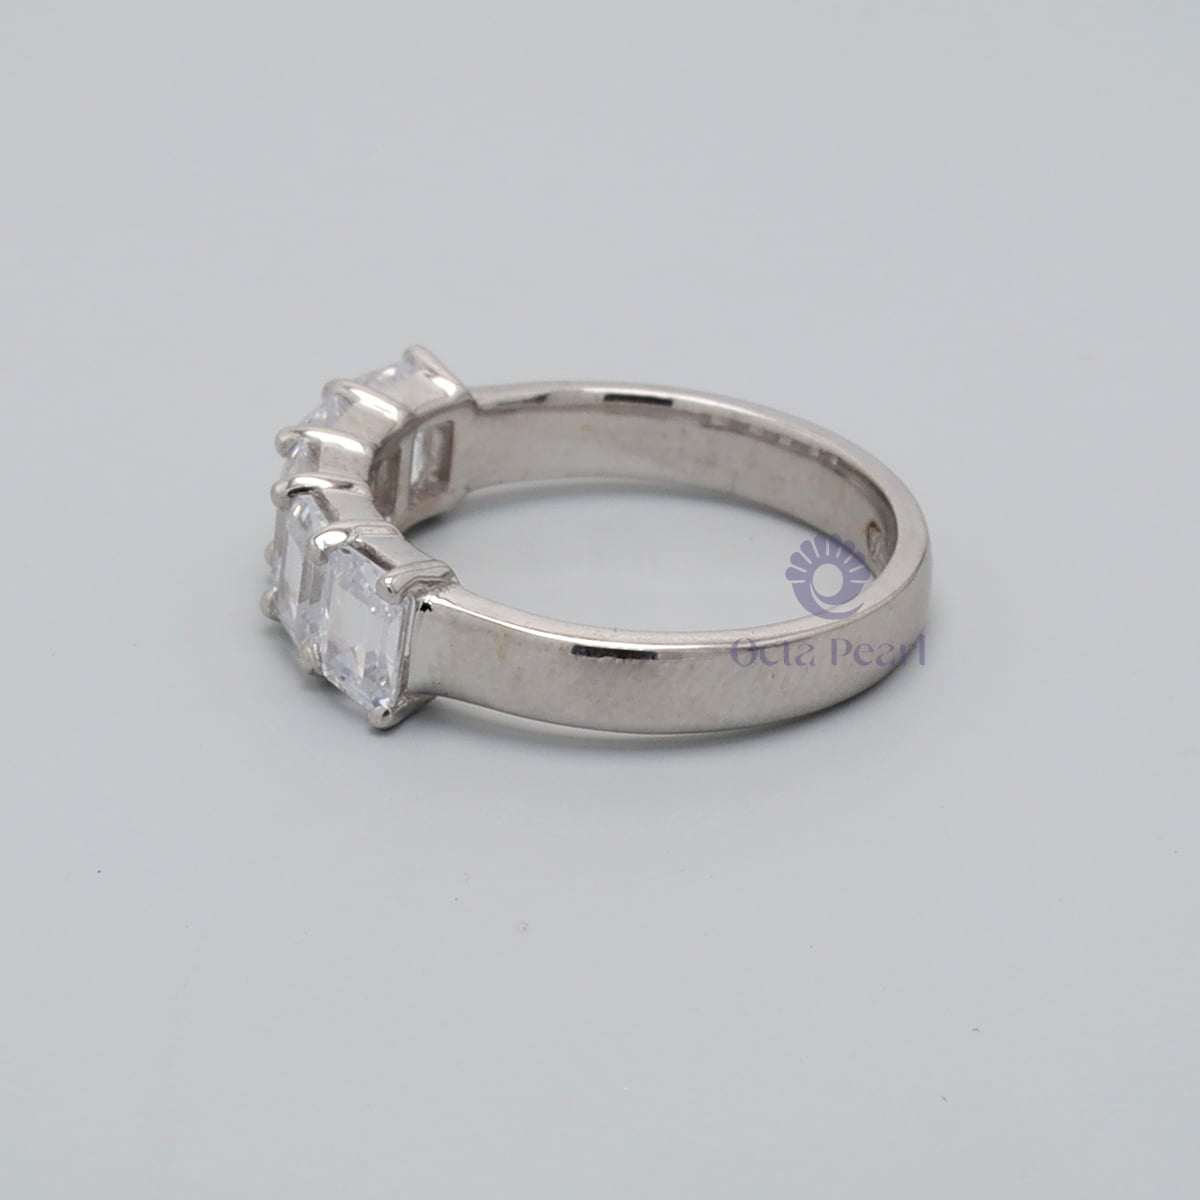 5-stones Emerald Cut Engagement Ring